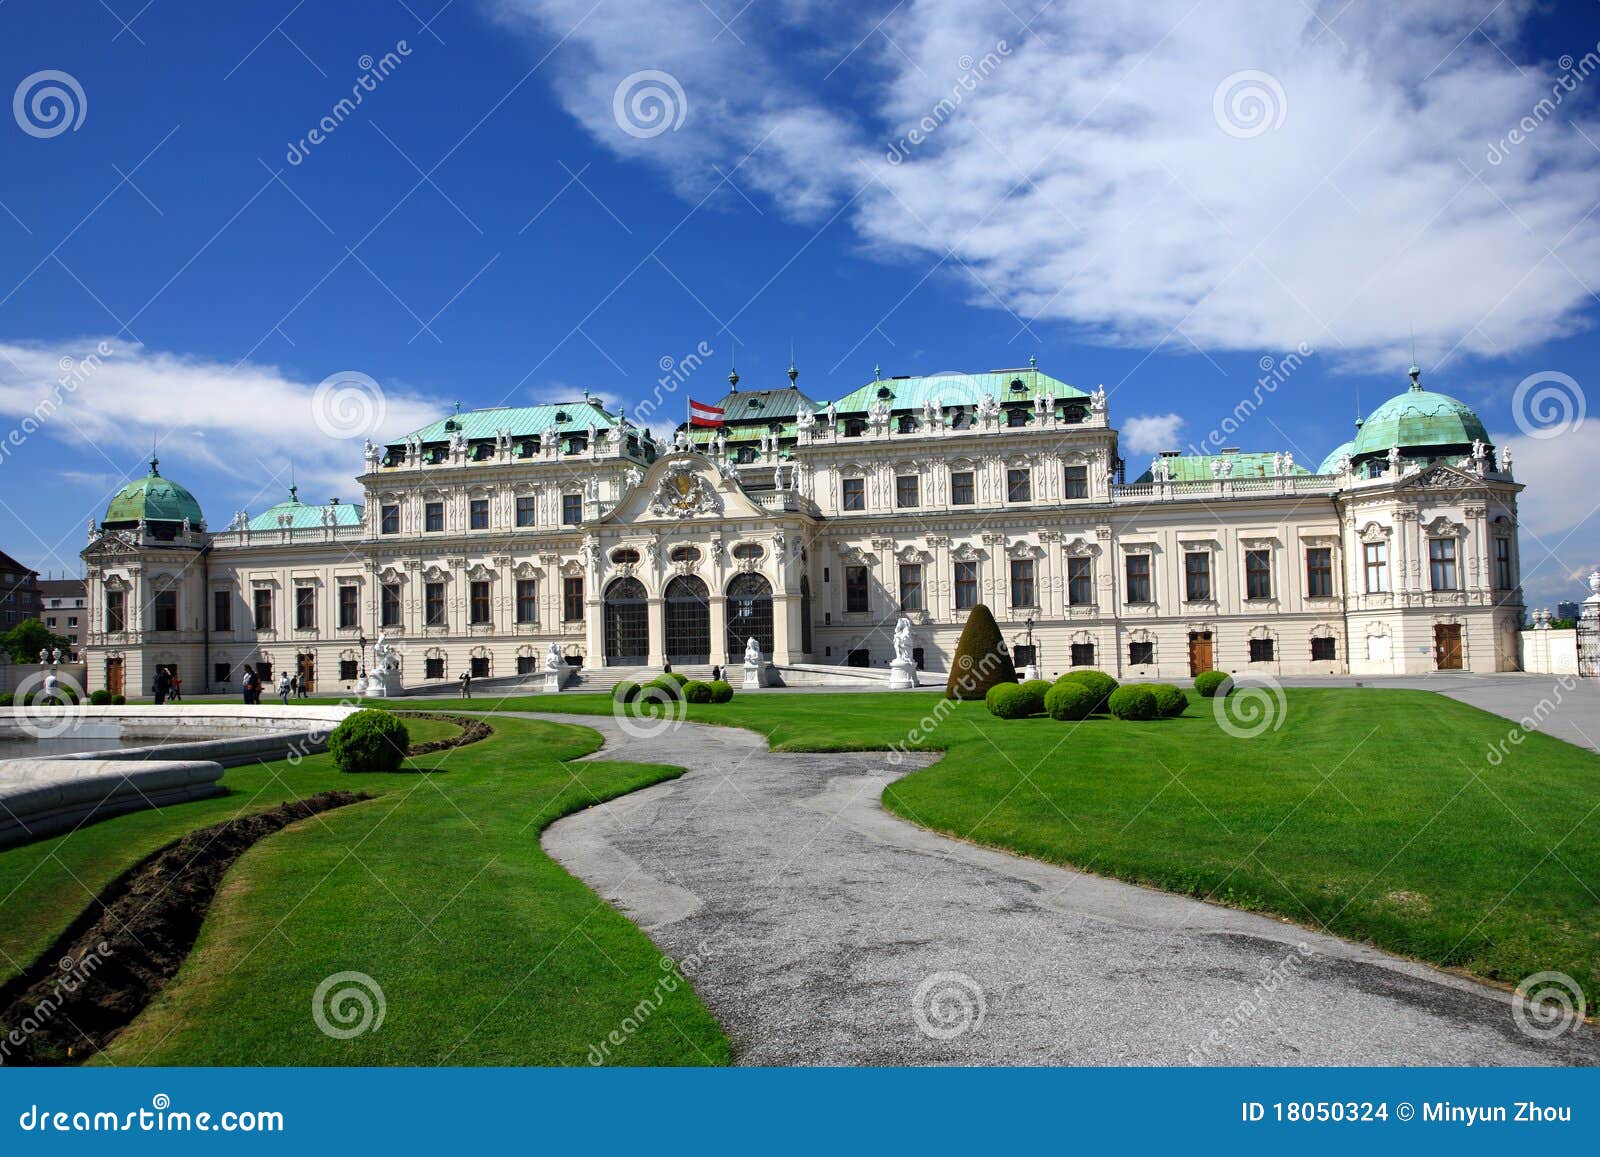 belvedere palace. vienna